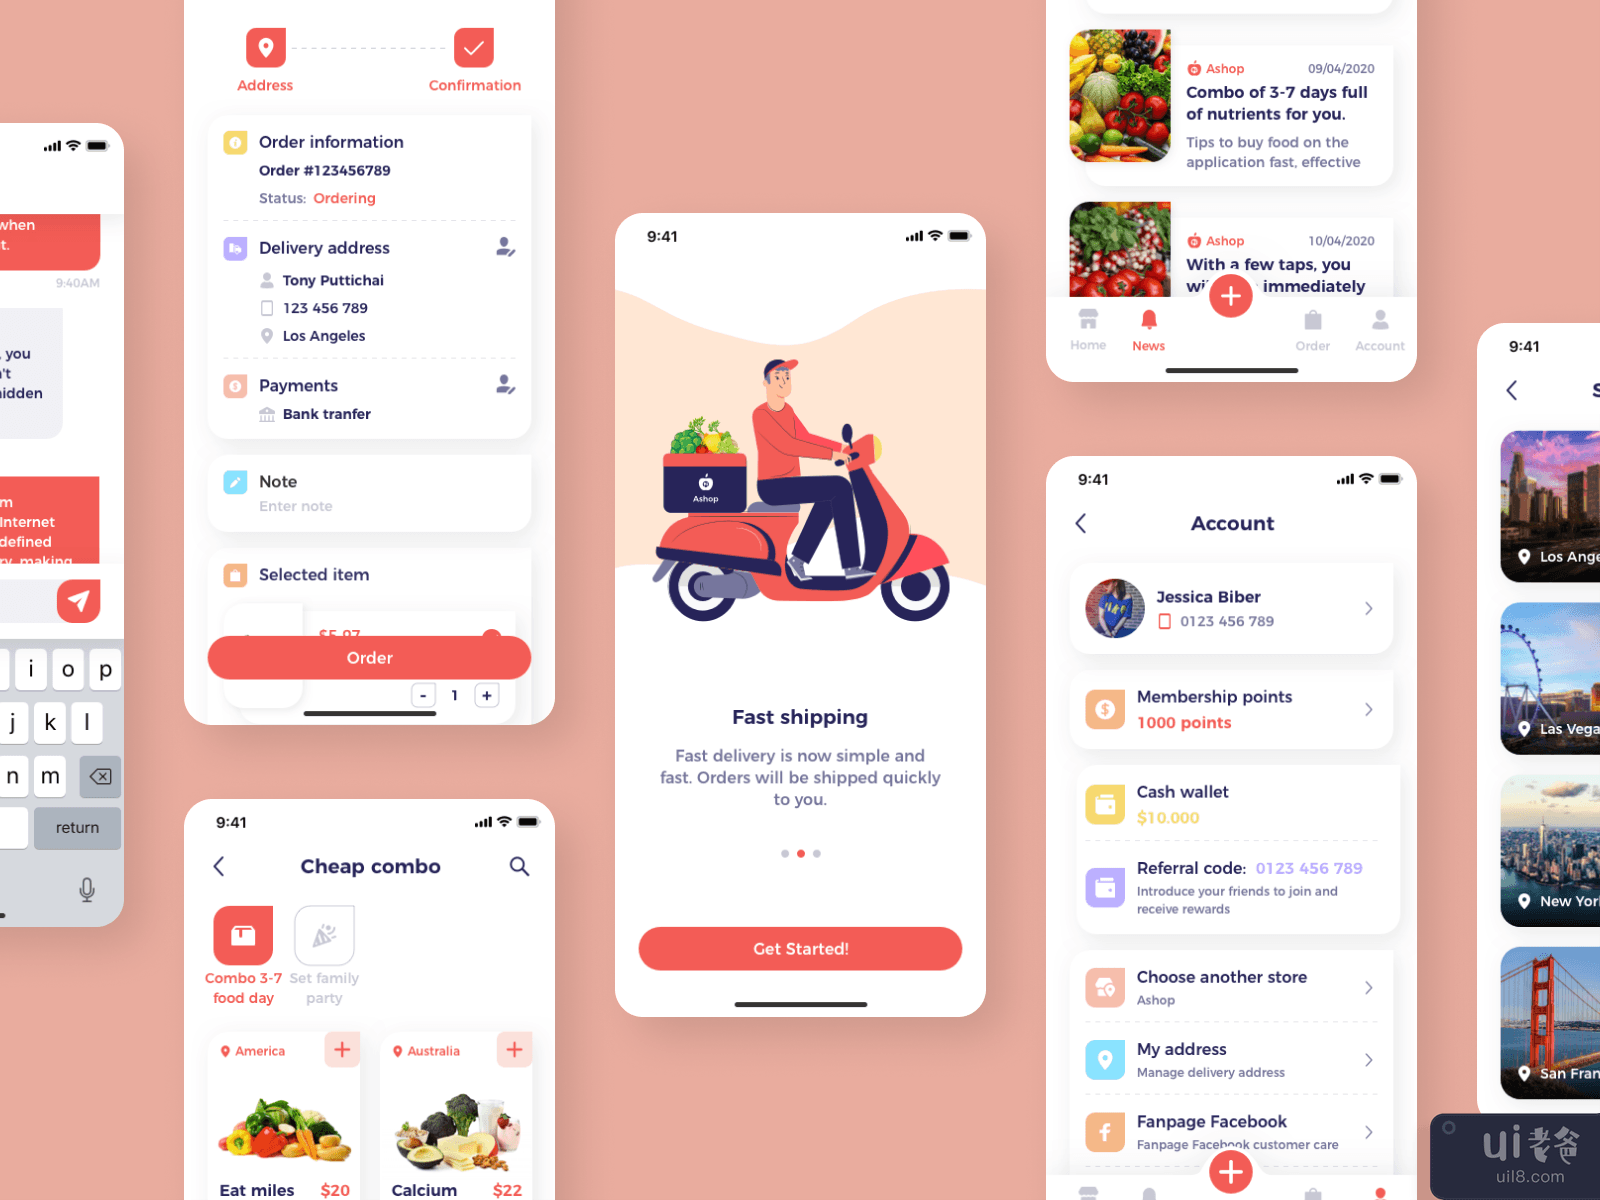 Ashop - Shopping Mobile App